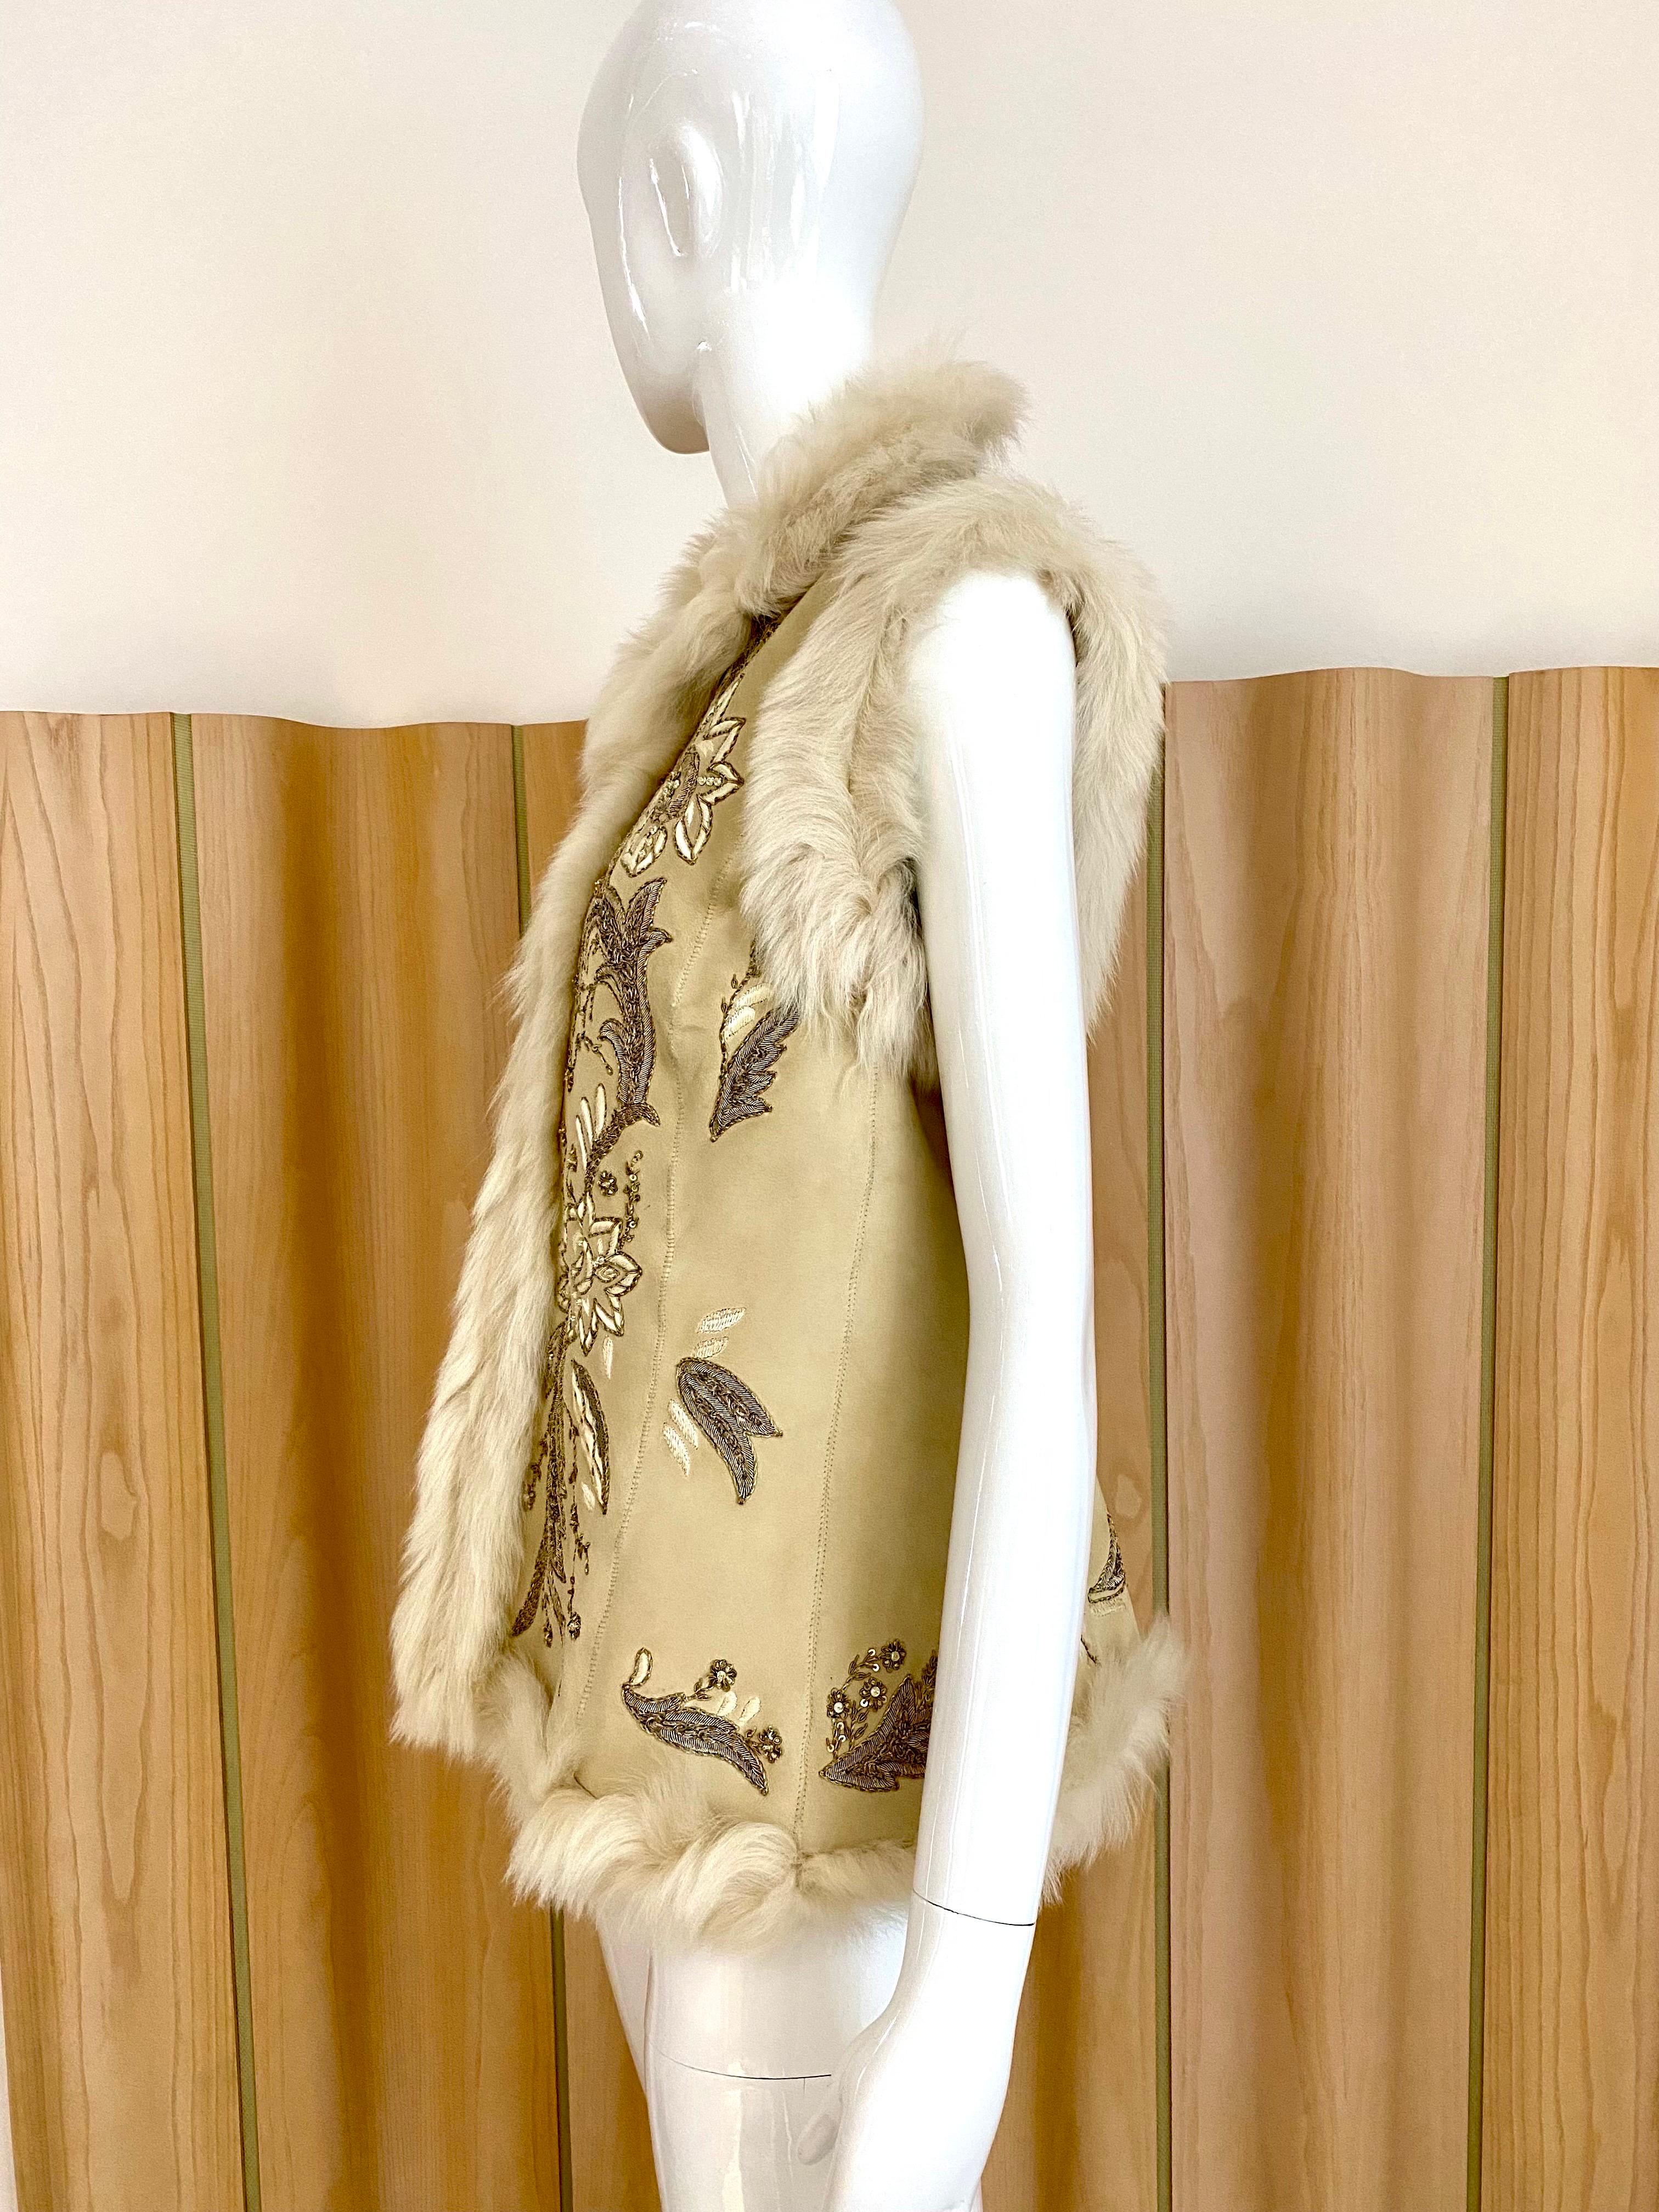 Ralph Laurent Purple label embroidered suede shearling vest.
Vest is in excellent condition . Size M
Bust: 38” / Waist: 35” / Hip: 39”/ Vest length: 24”

